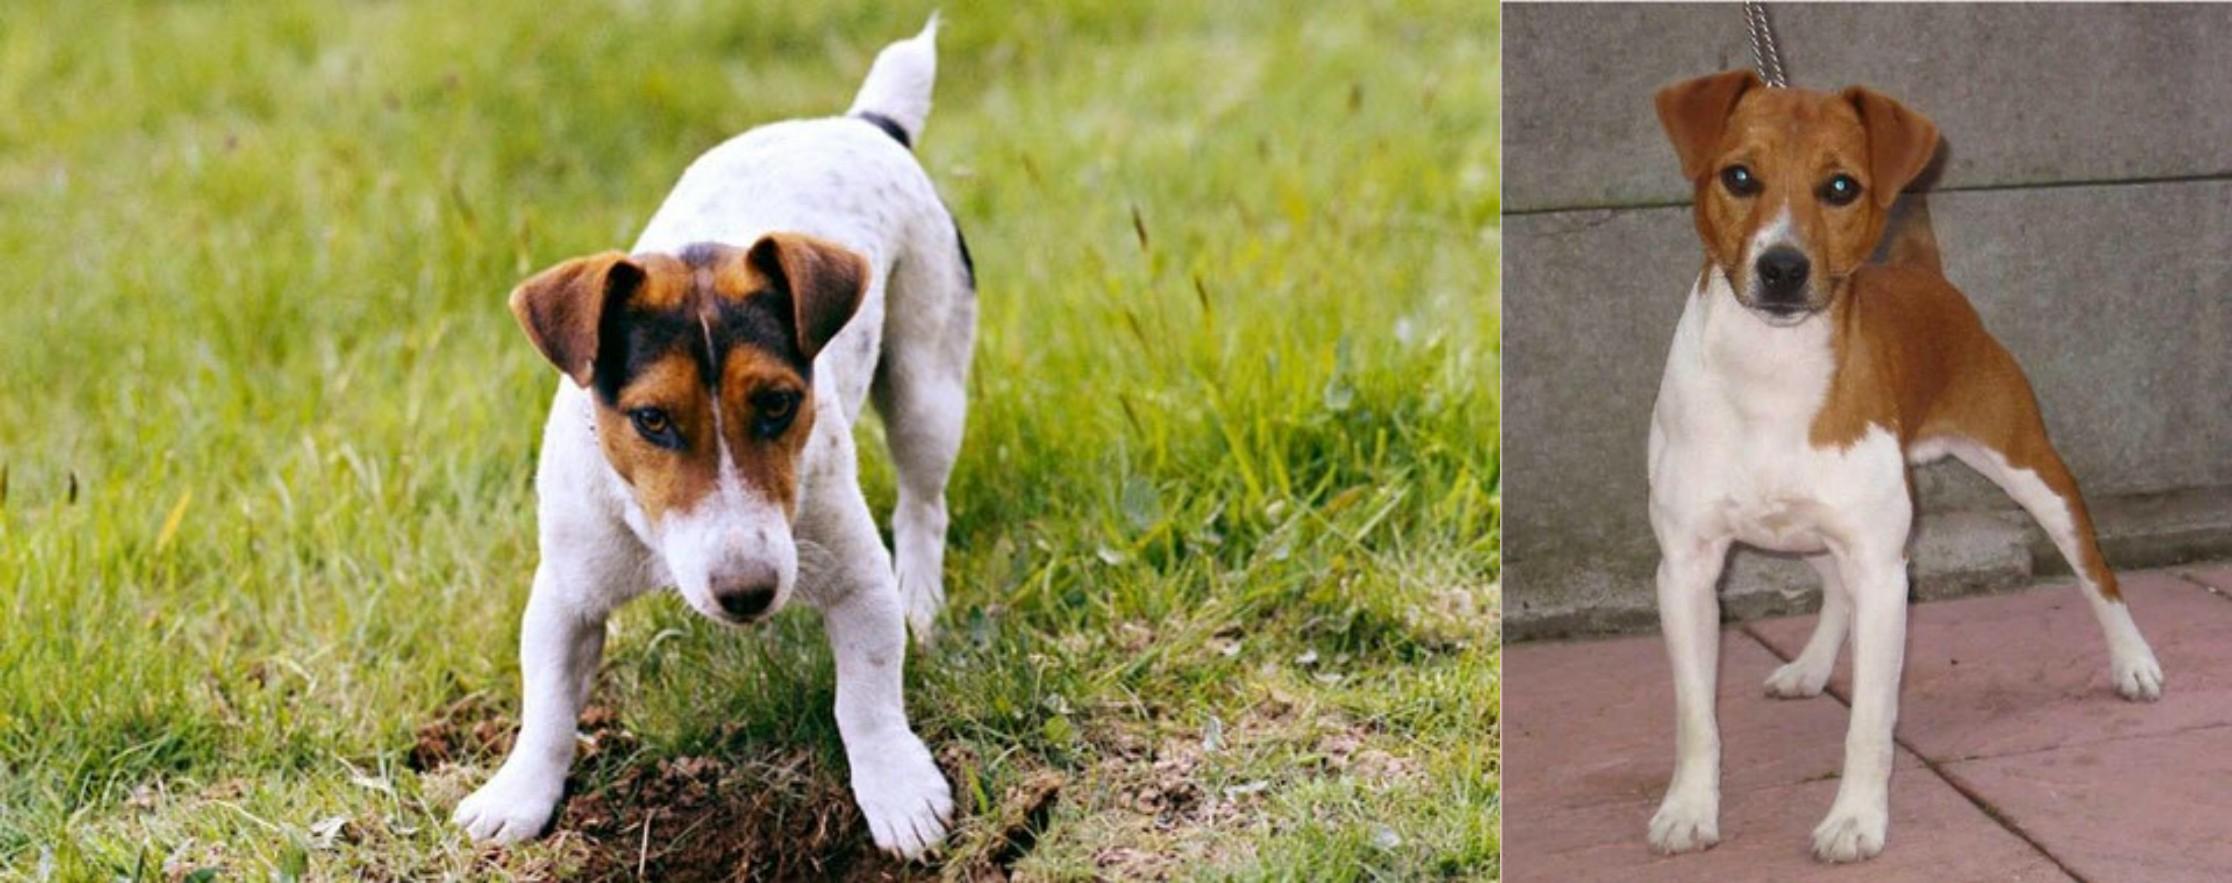 Russell Terrier Vs Plummer Terrier Breed Comparison